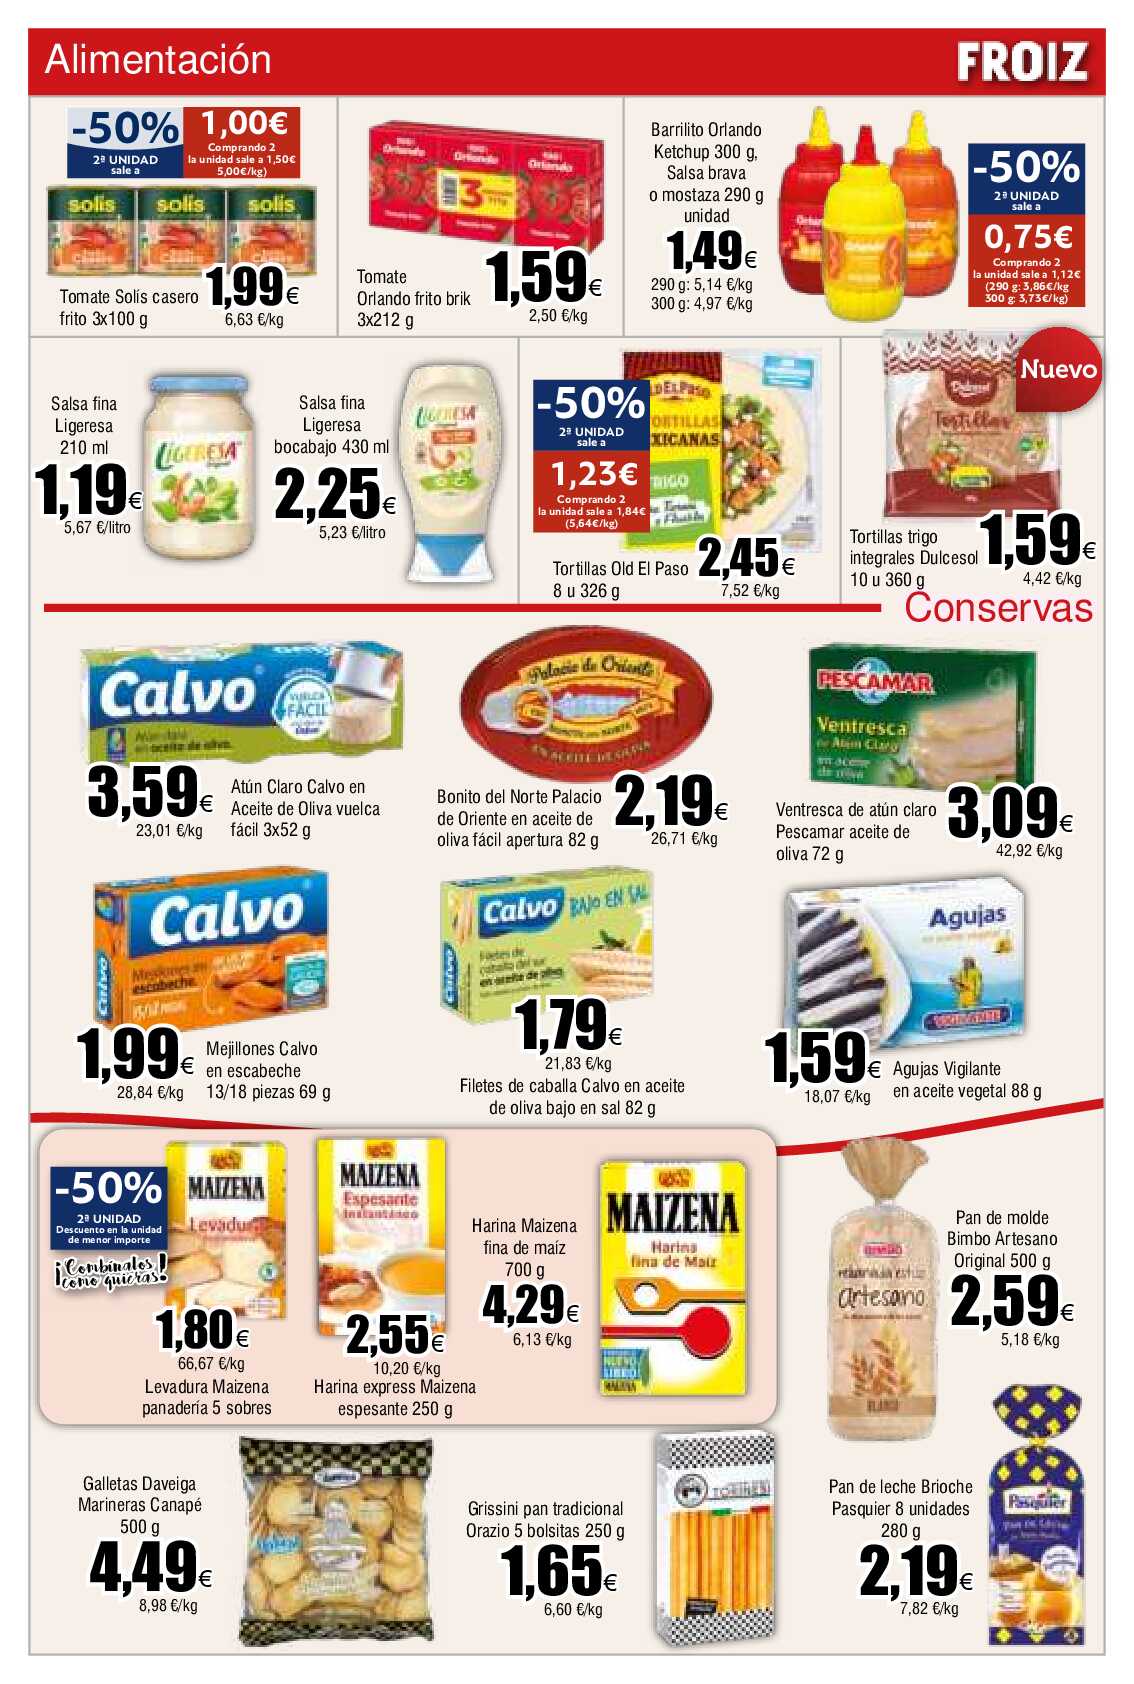 Ofertas supermercado Froiz. Página 11